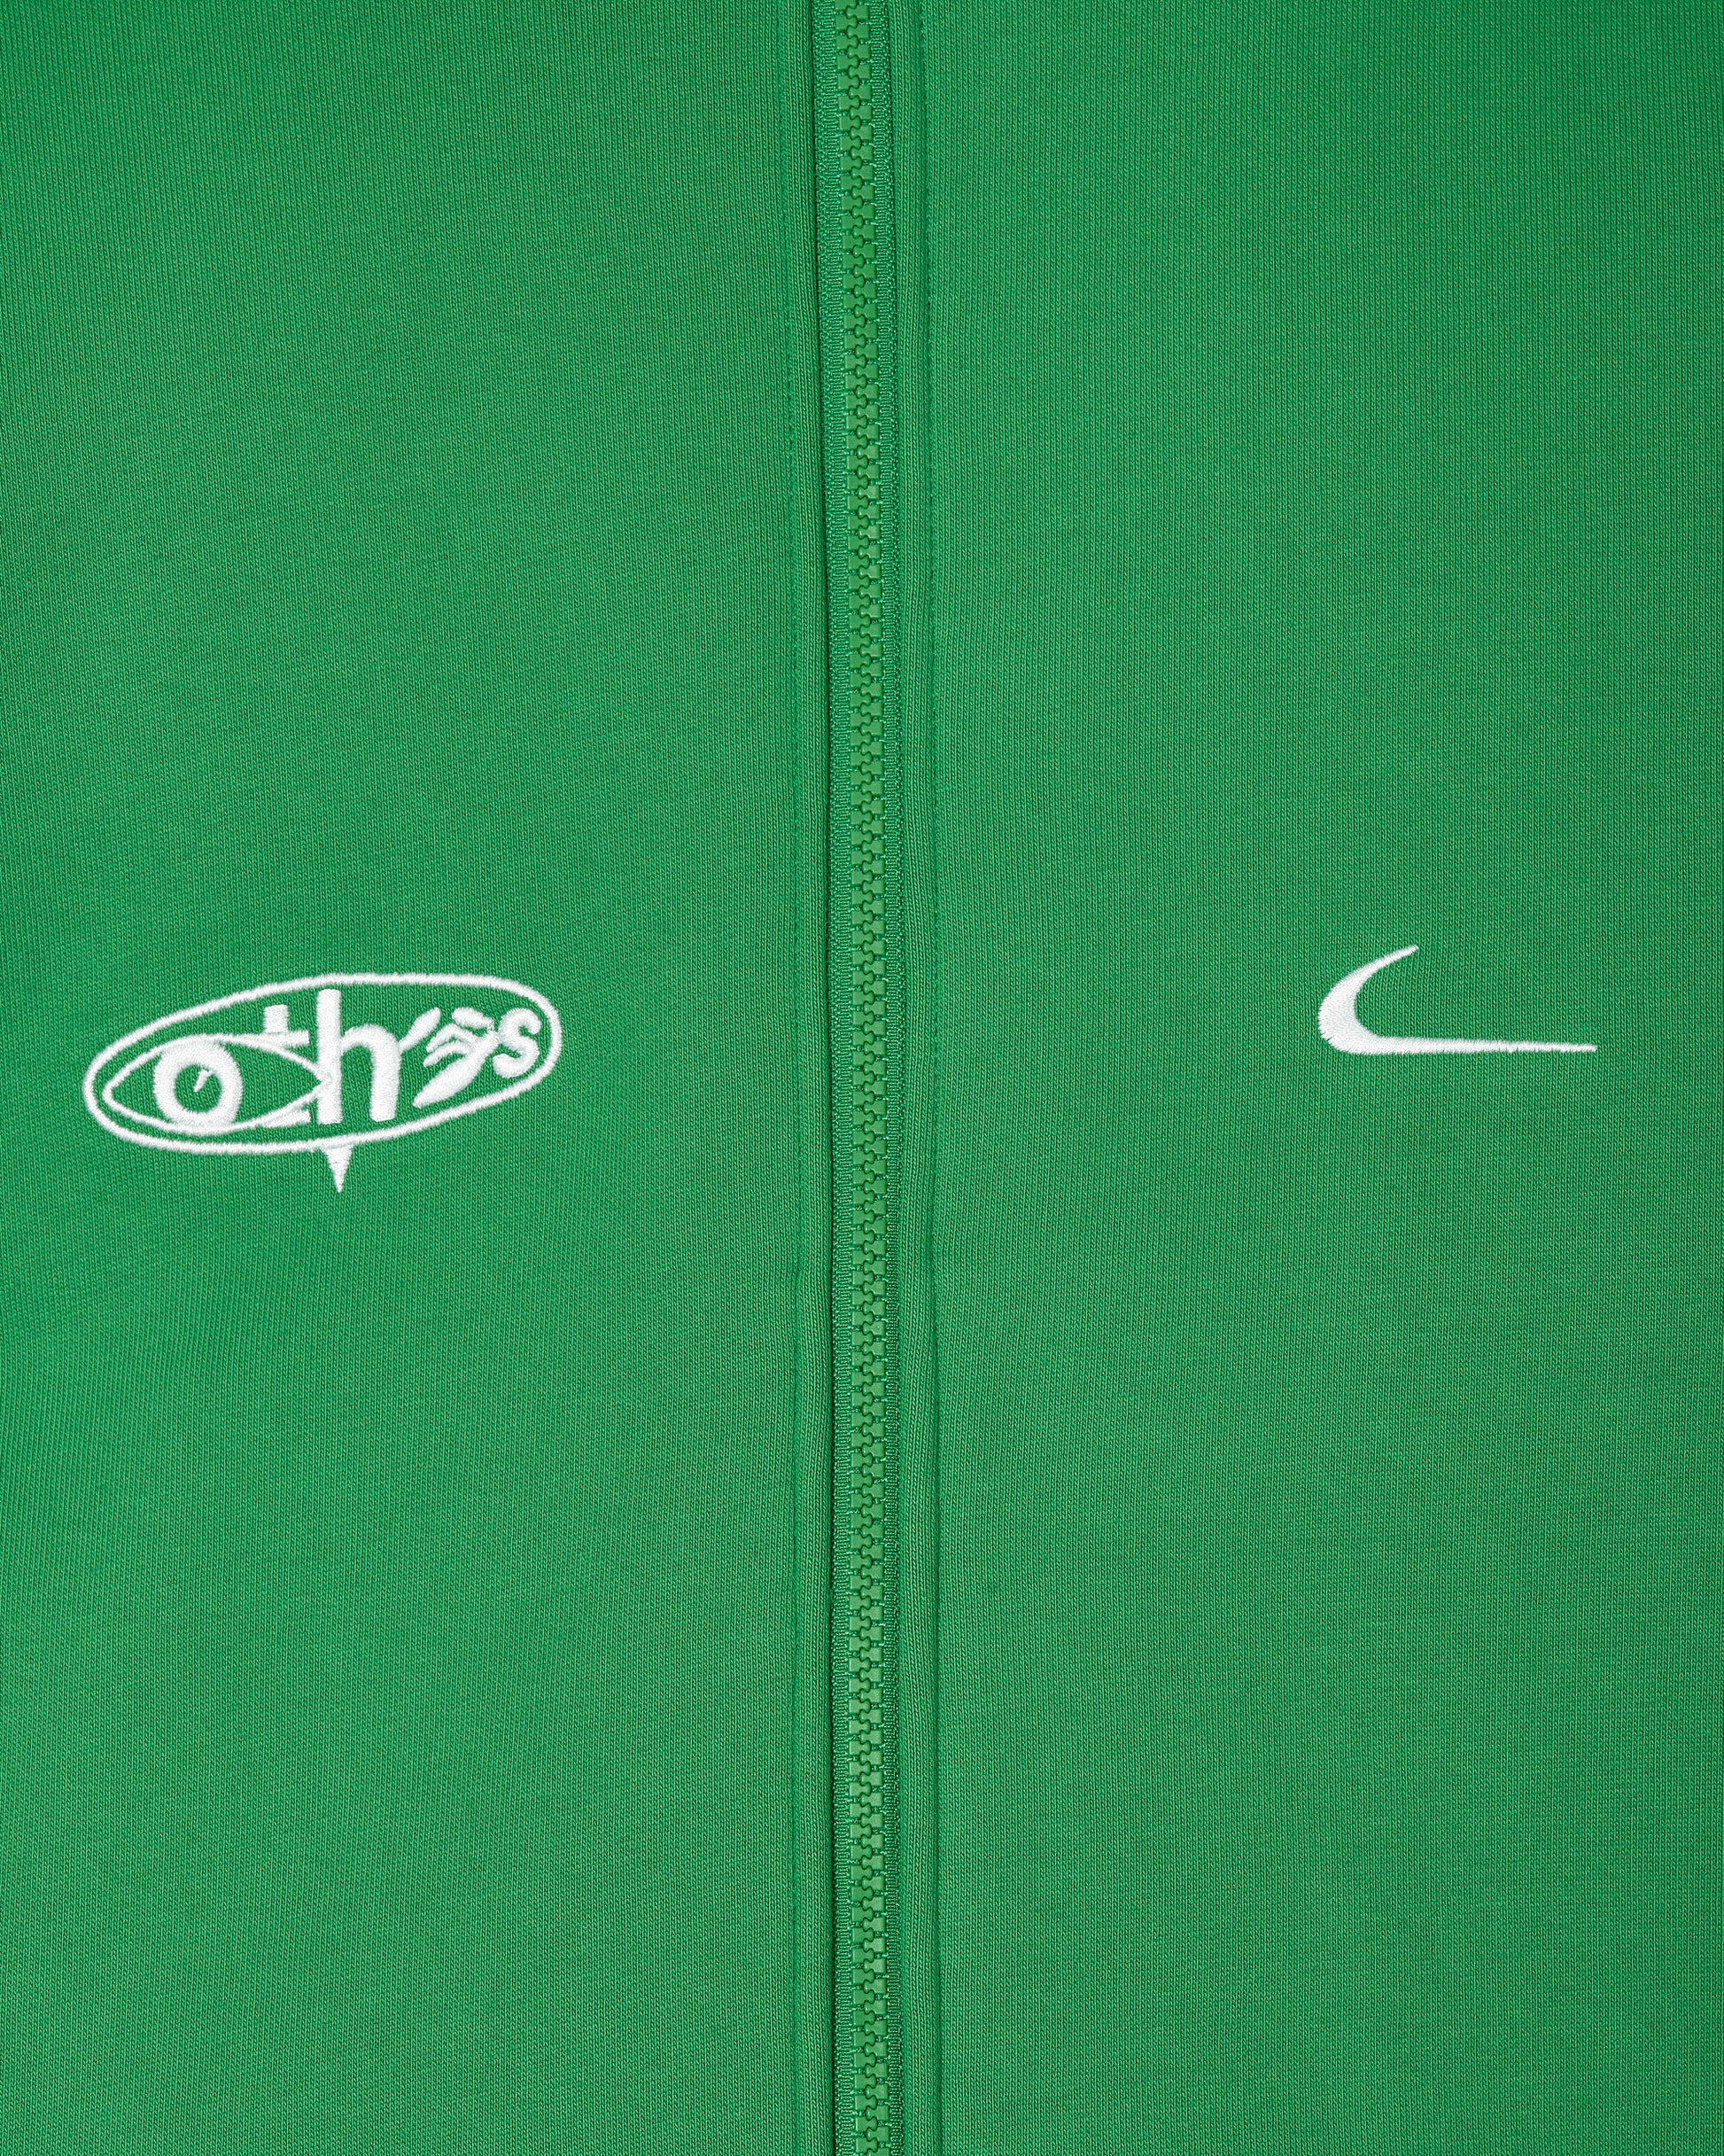 Nike U Nrg Mc Track Jacket Kelly Green Sweatshirts Track Tops DV4389-389